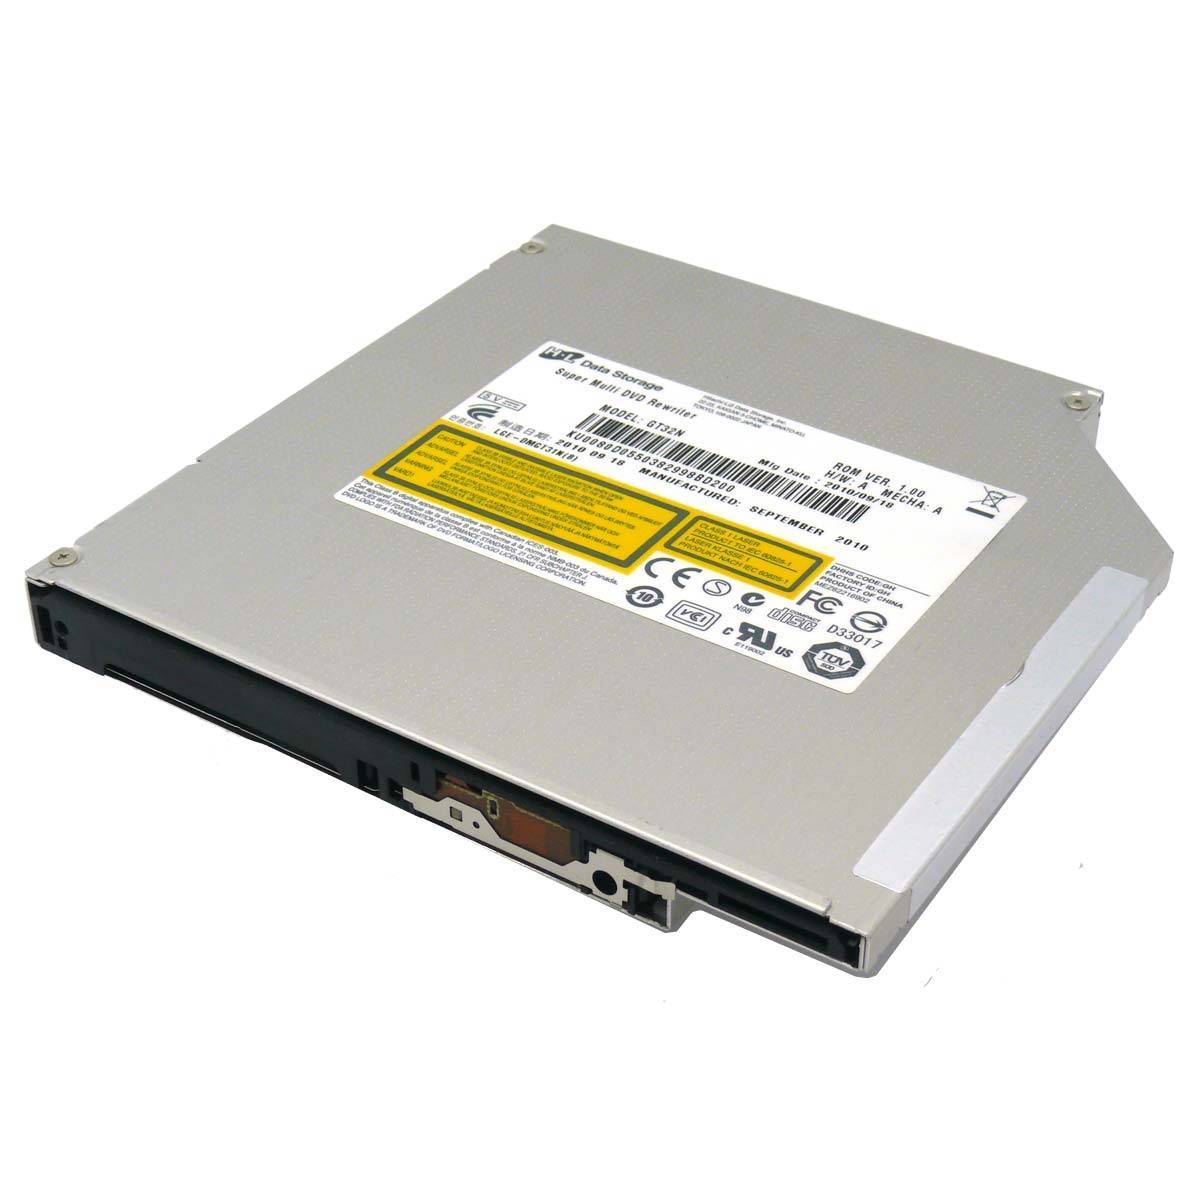 DVD-Brenner LG GT32N Brenner 12.5 Slim SATA gebraucht